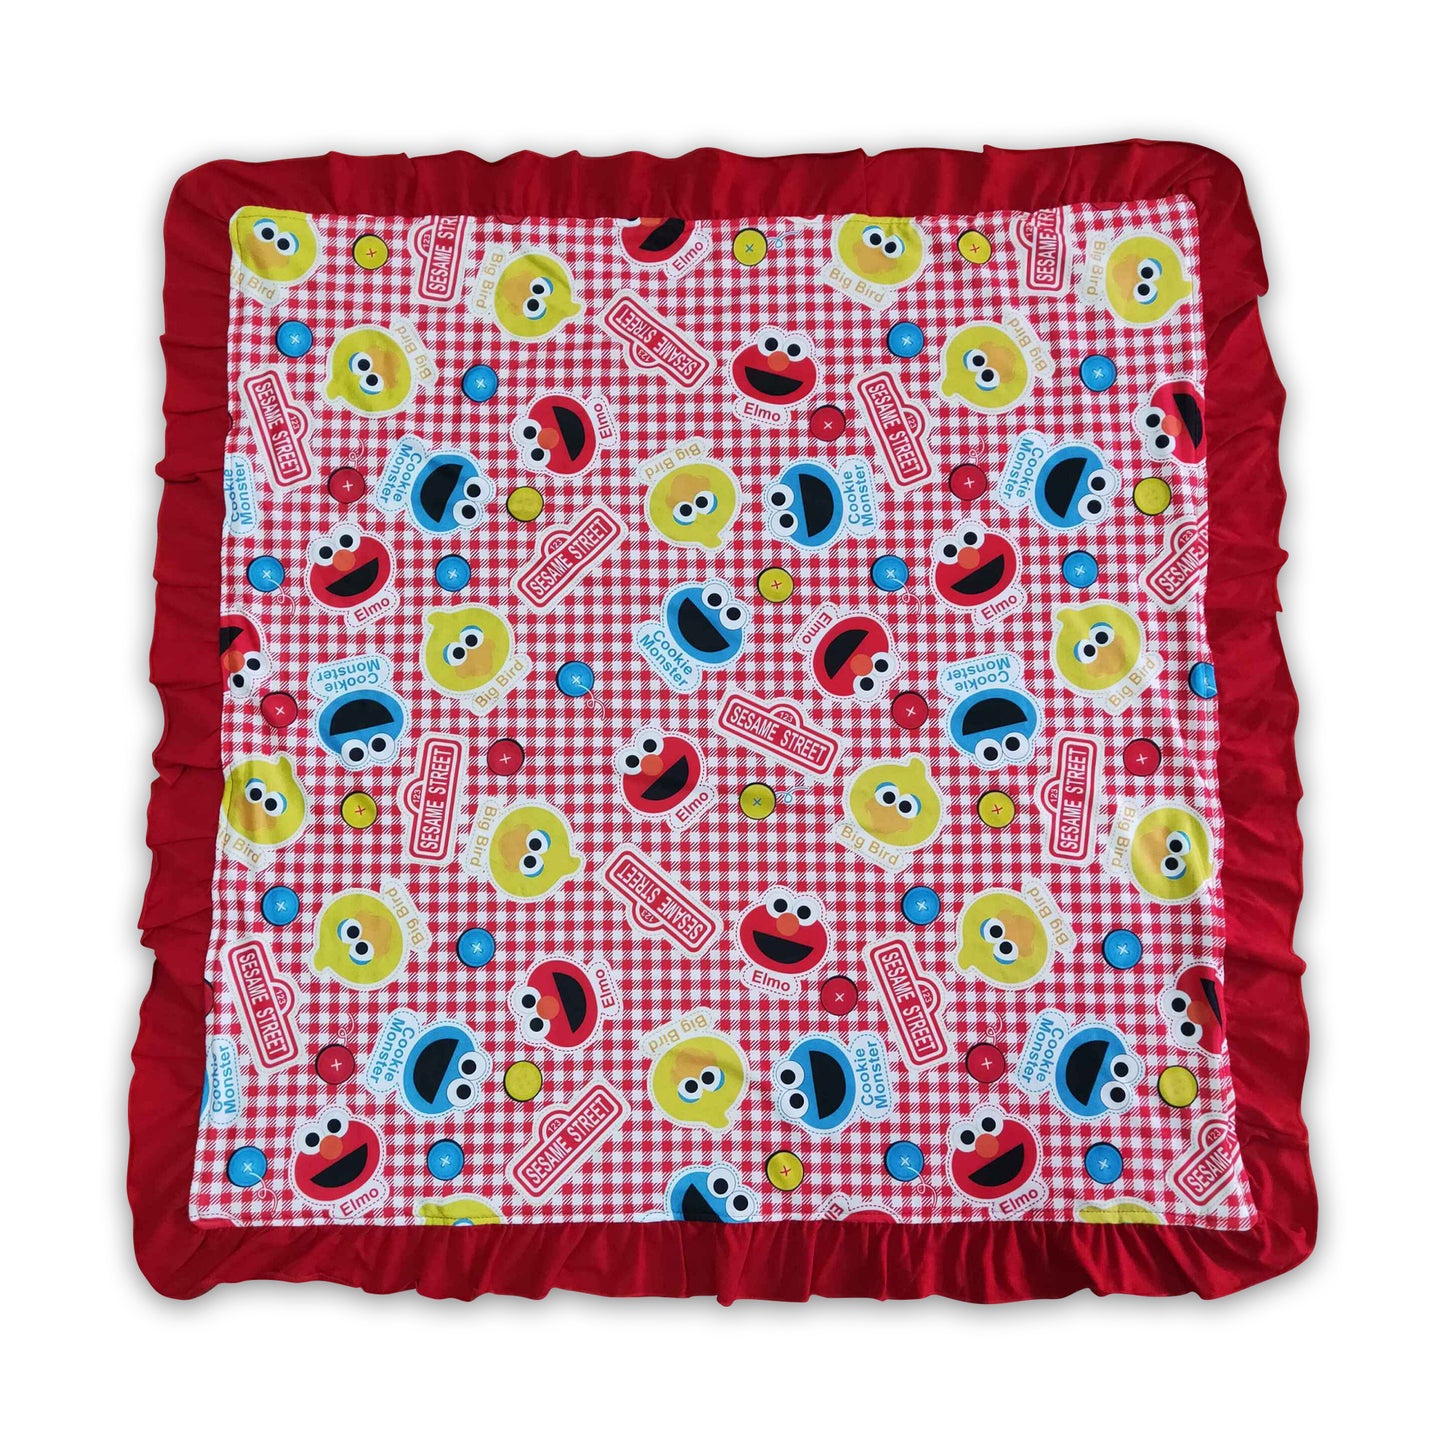 Cute hairy animal red ruffle polka dots minky baby blankets